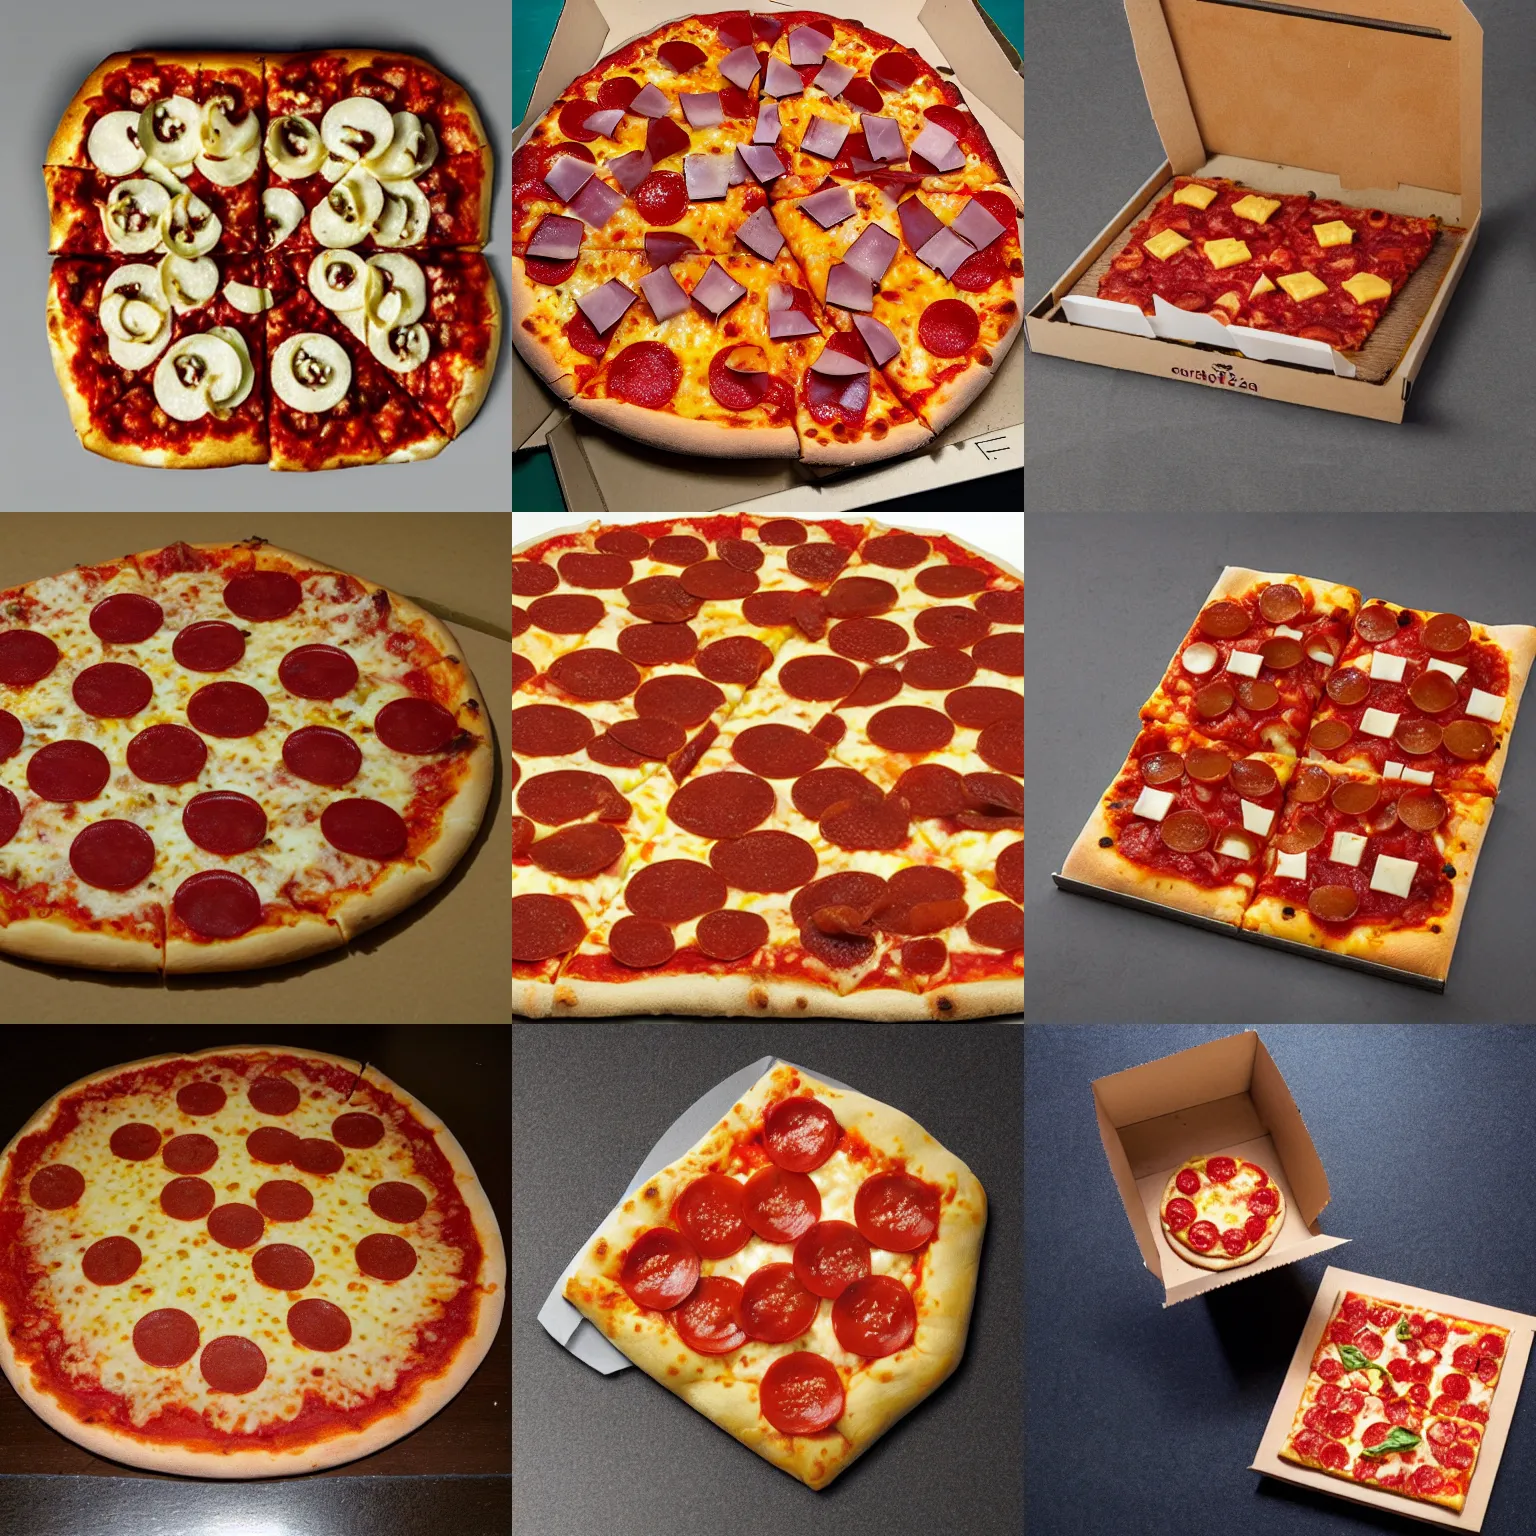 Prompt: a cubic pizza